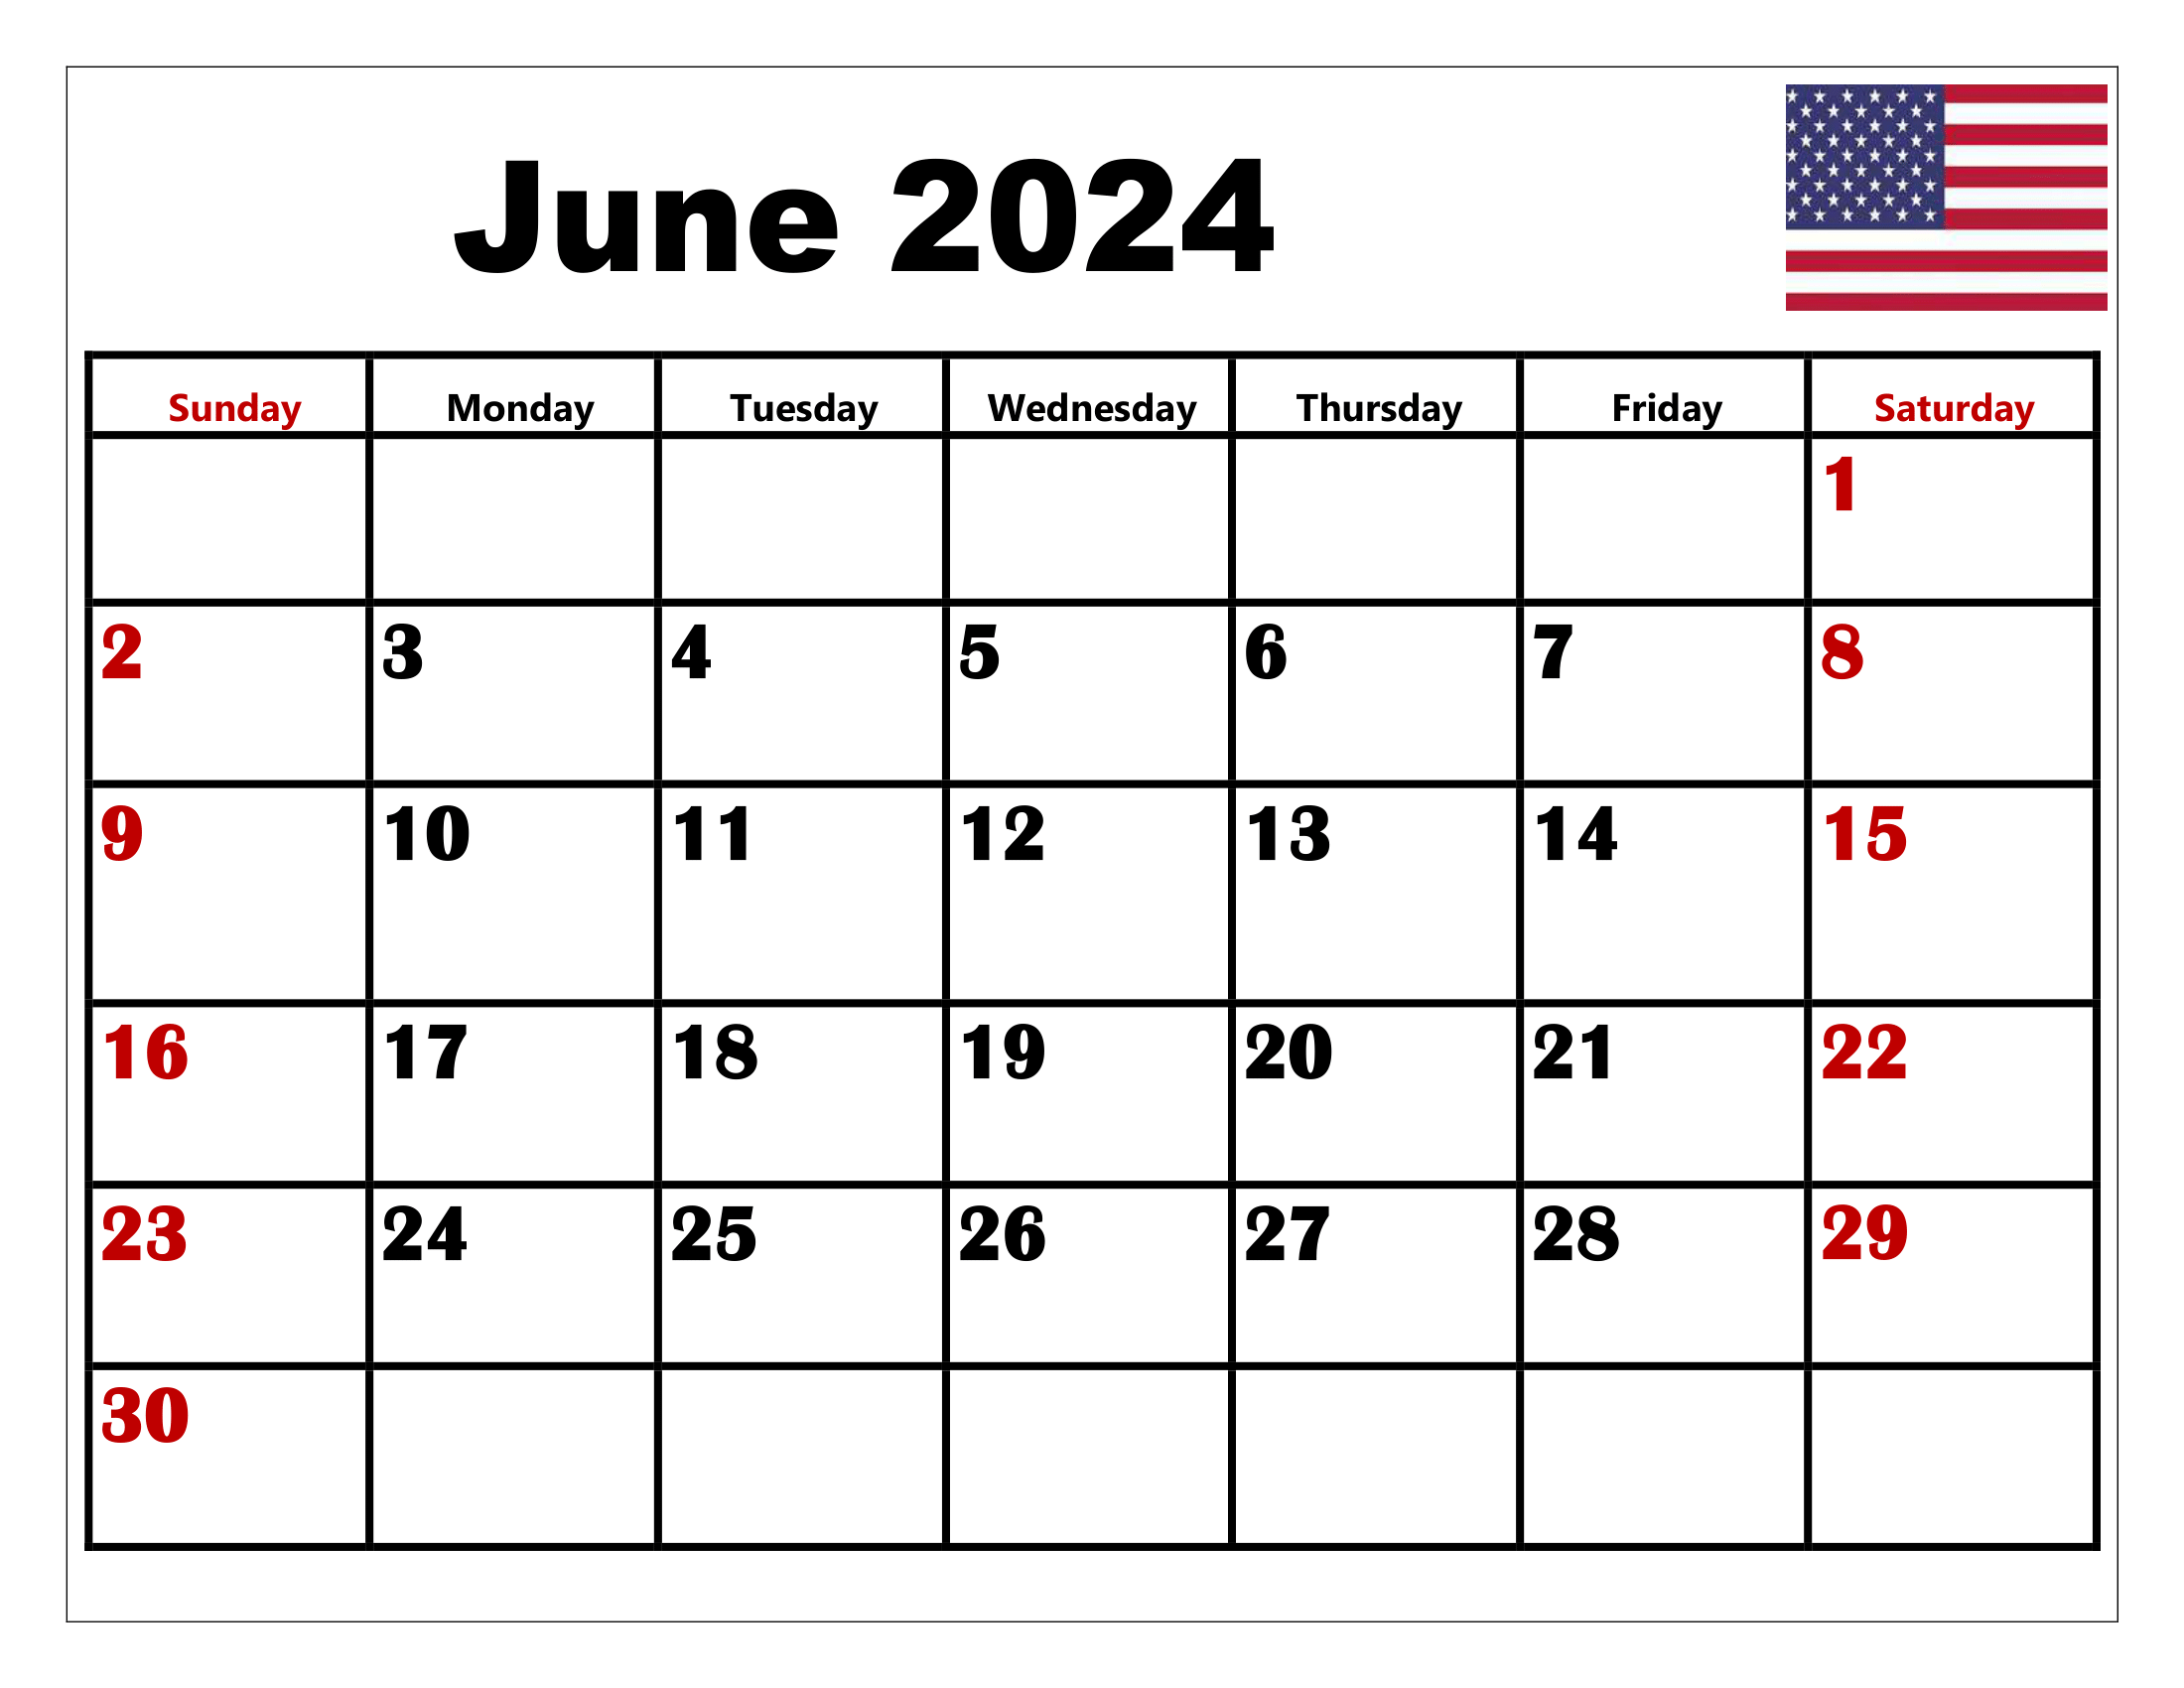 Calendar June 2024 Template Free Netti Adriaens - Free Printable 2024 Calendar June